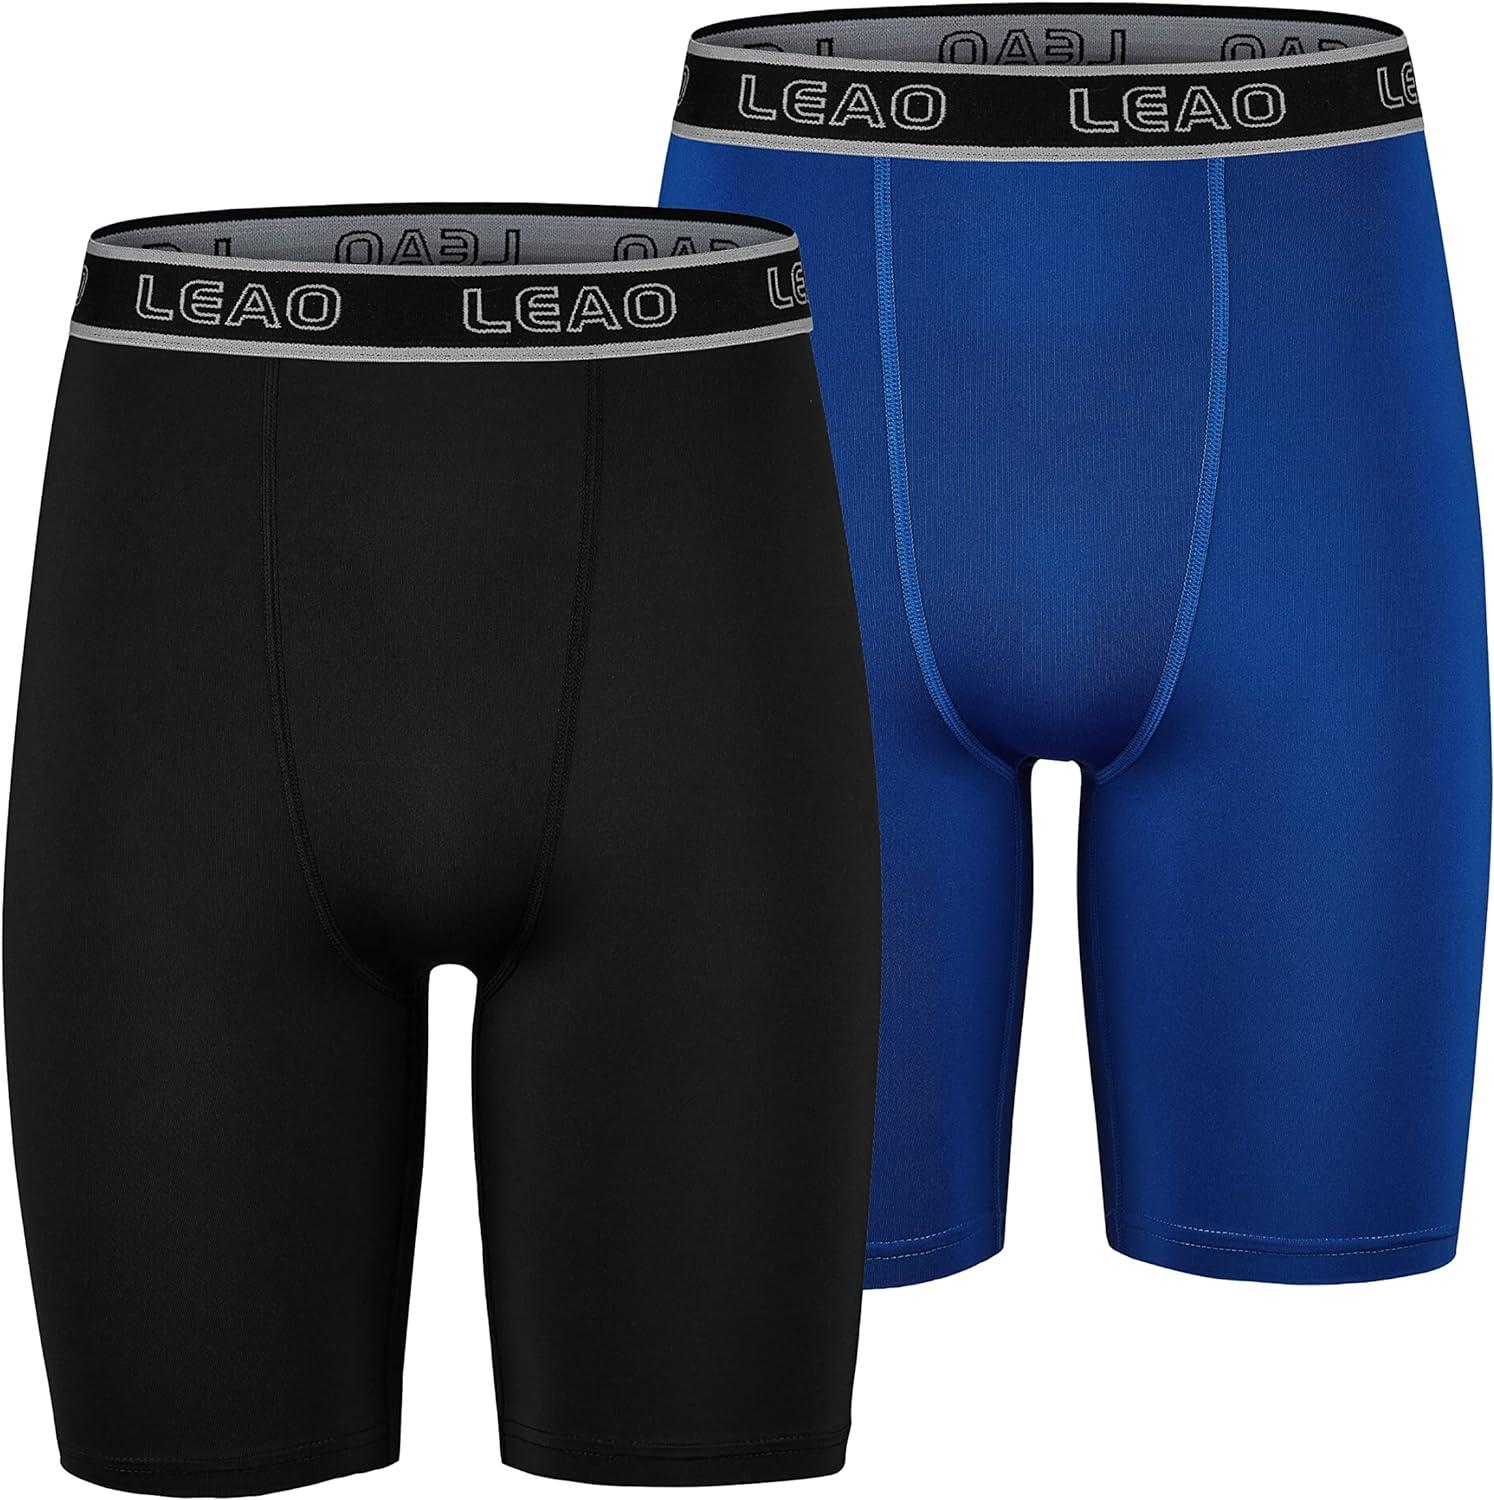 Nike Jordan Black Compression Training Shorts Boxers Youth Boys